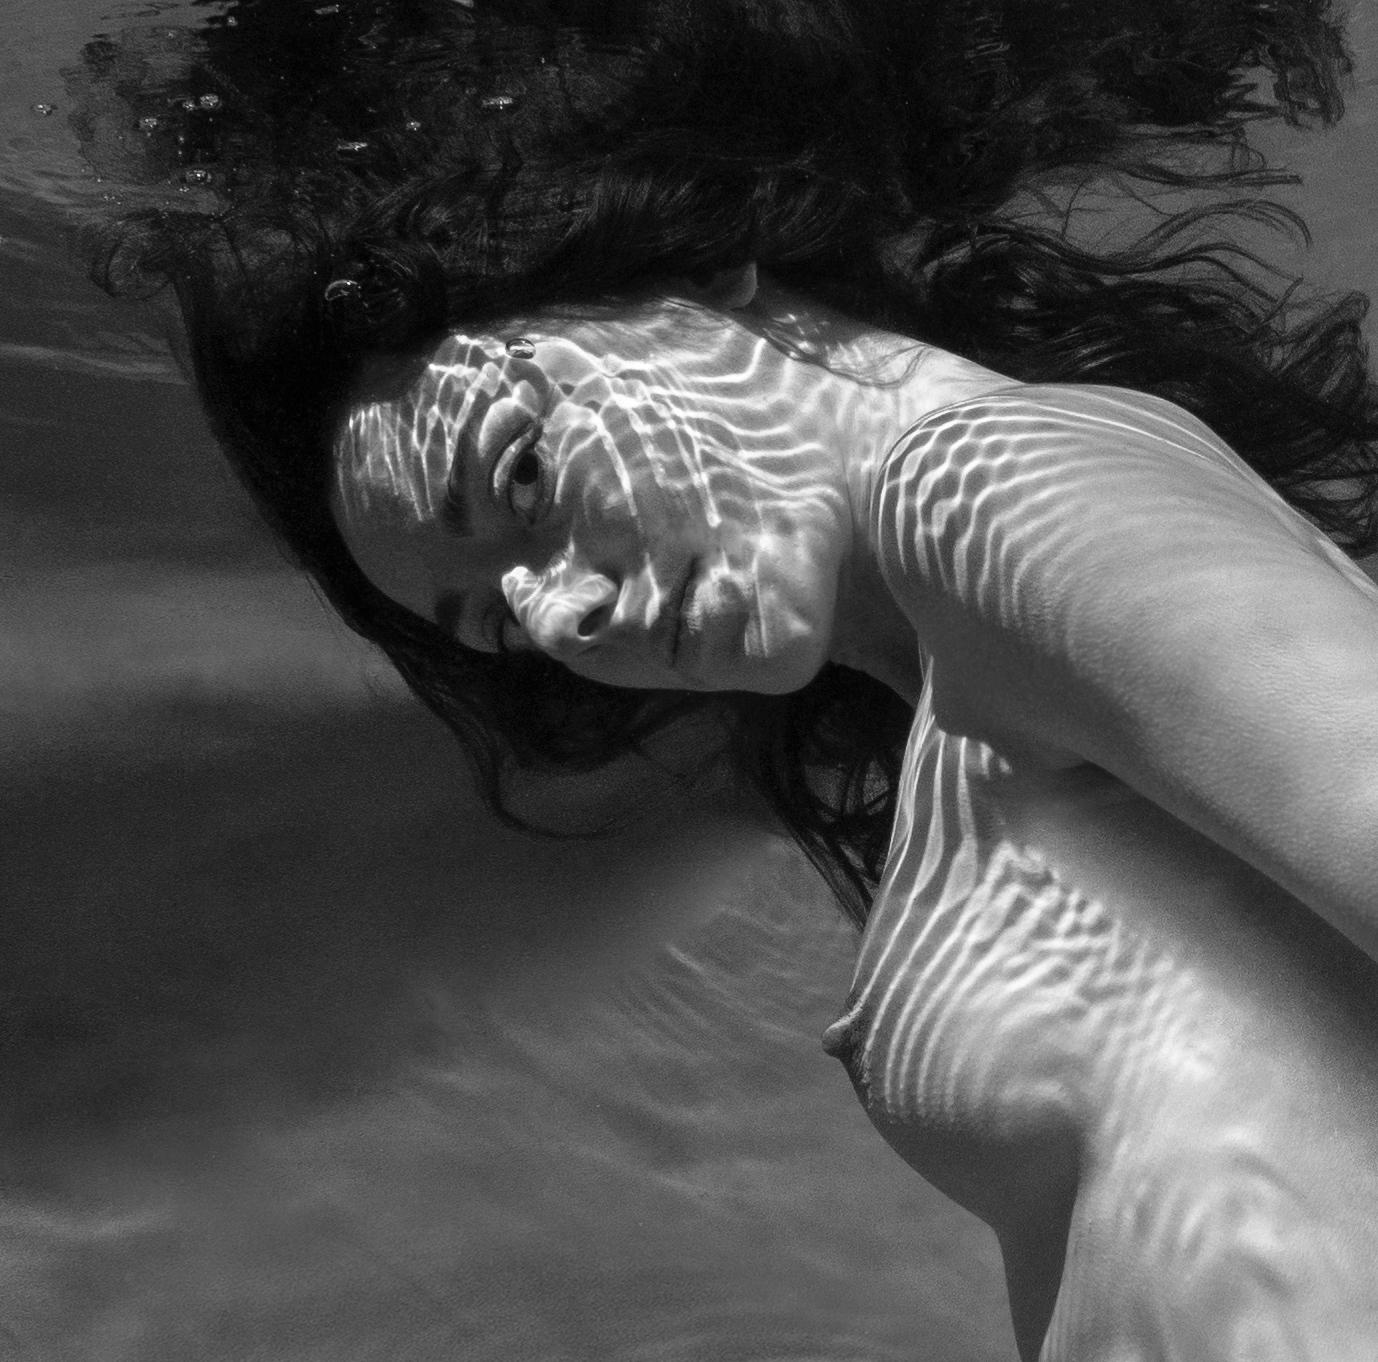 Eyes and Stripes - underwater b&w nude photograph - print on aluminum 36х26